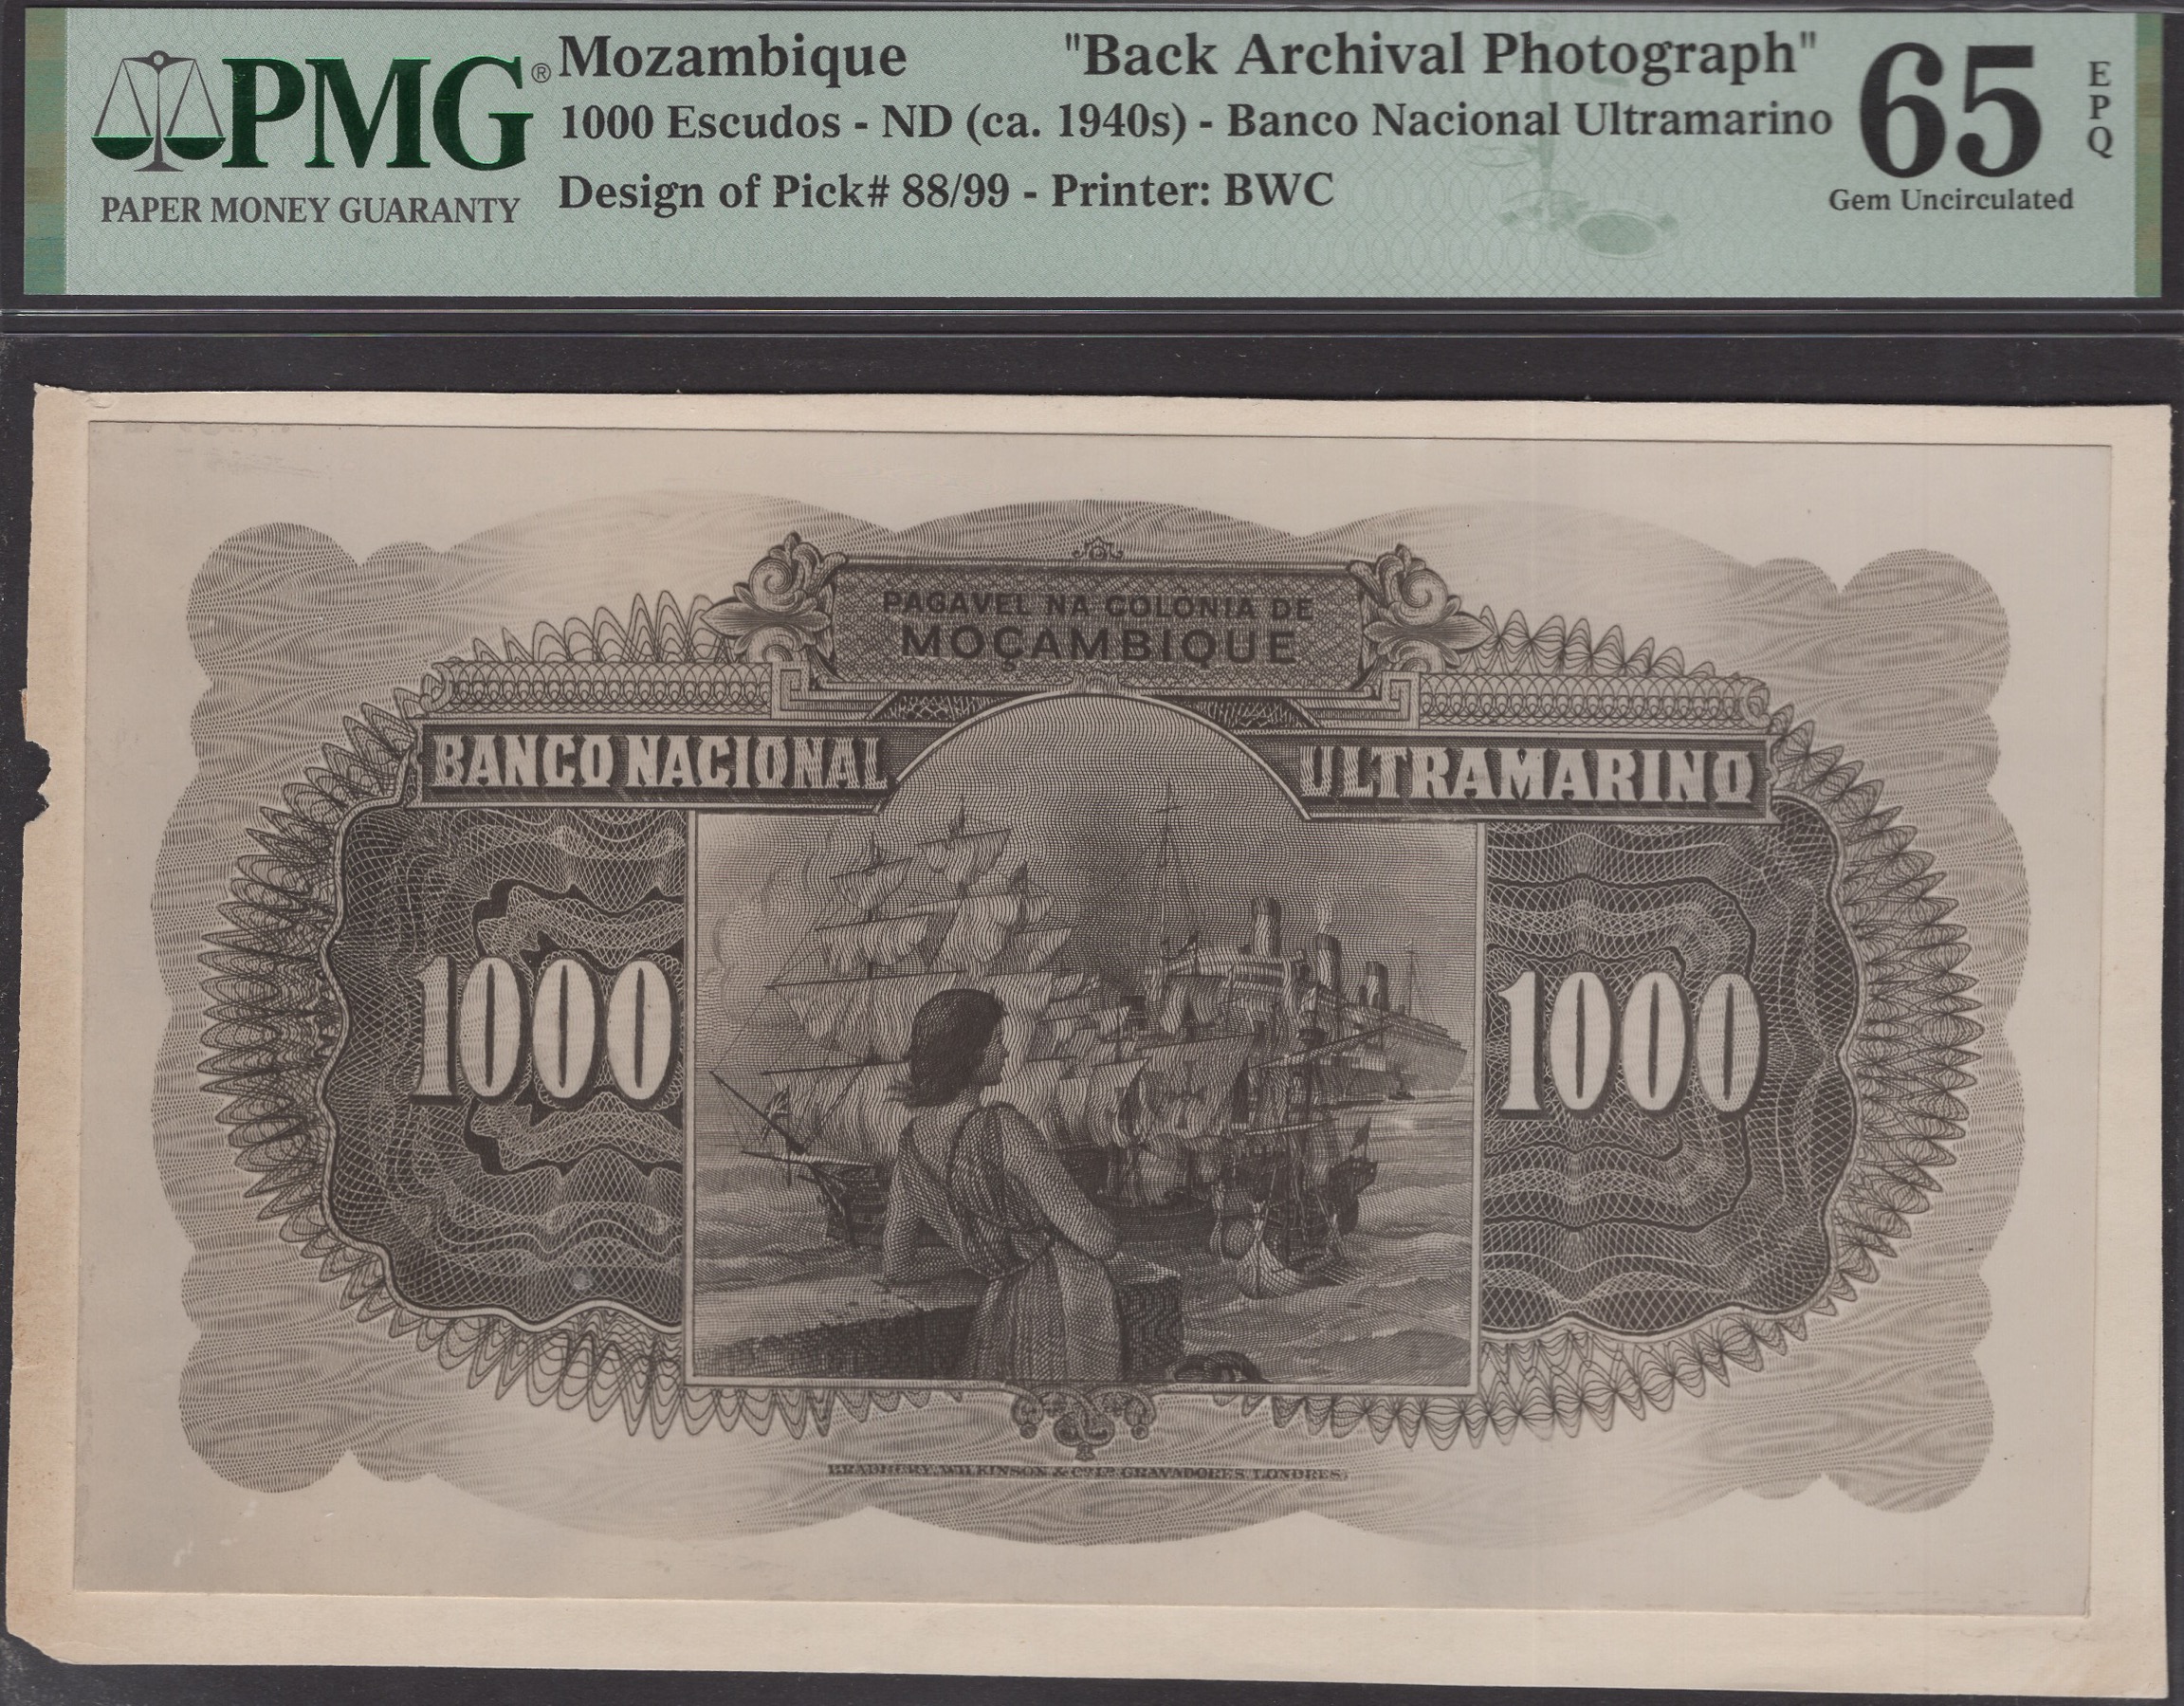 Banco Nacional Ultramarino, Mozambique, obverse (1) and reverse (2) archival photographs... - Image 5 of 6